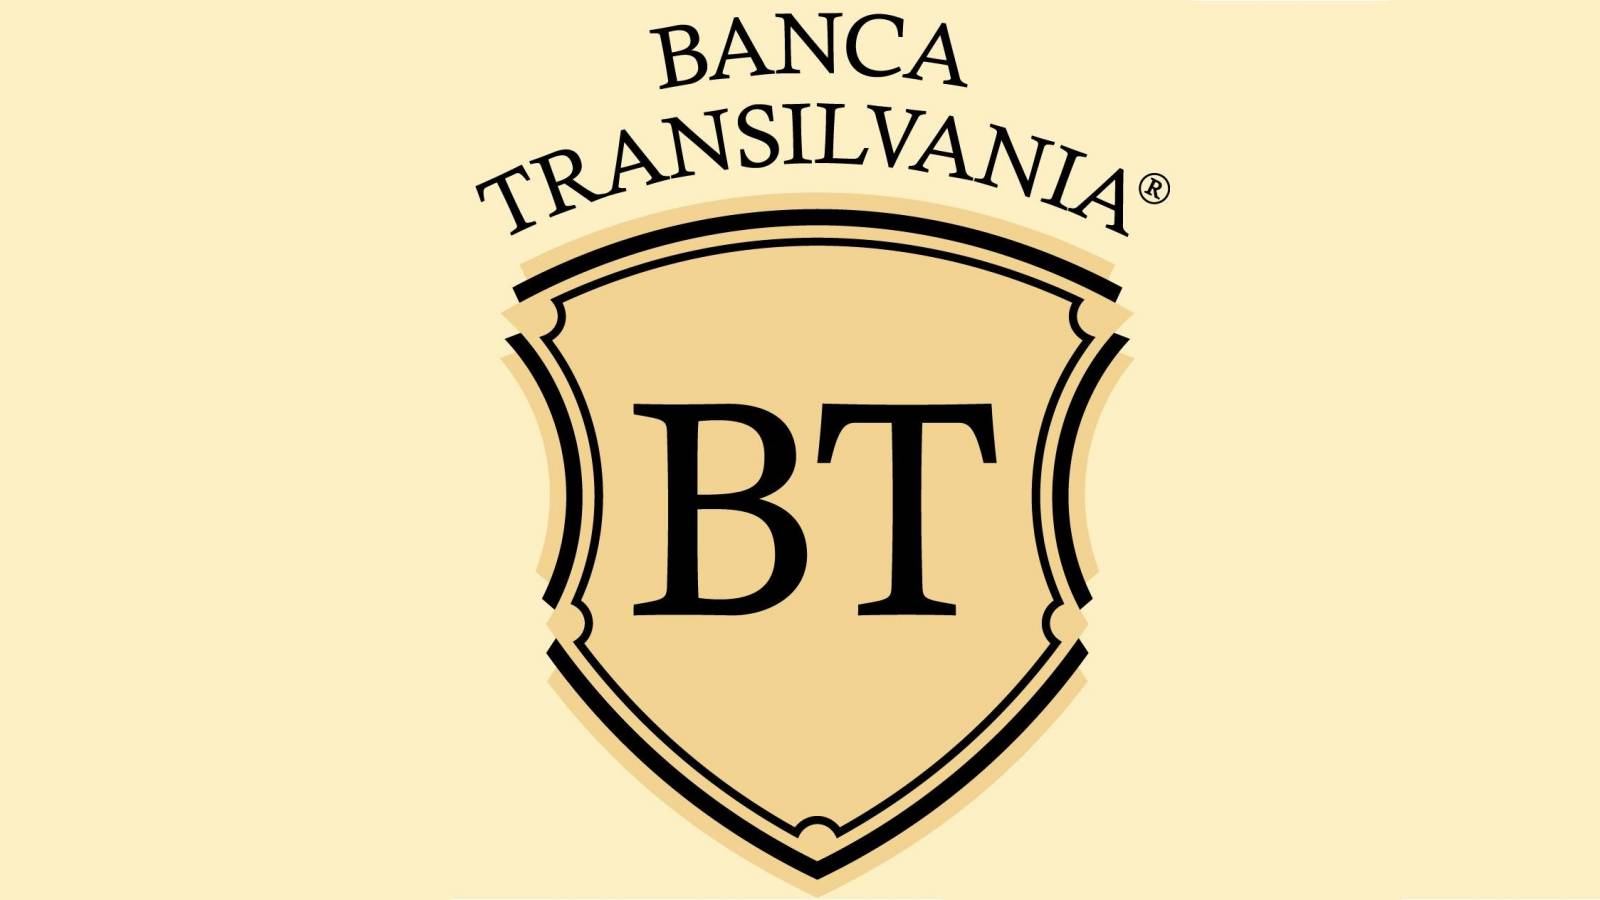 BANCA Transilvania Informatia Oficiala ULTIM MOMENT Transmisa Clientilor Toata Romania